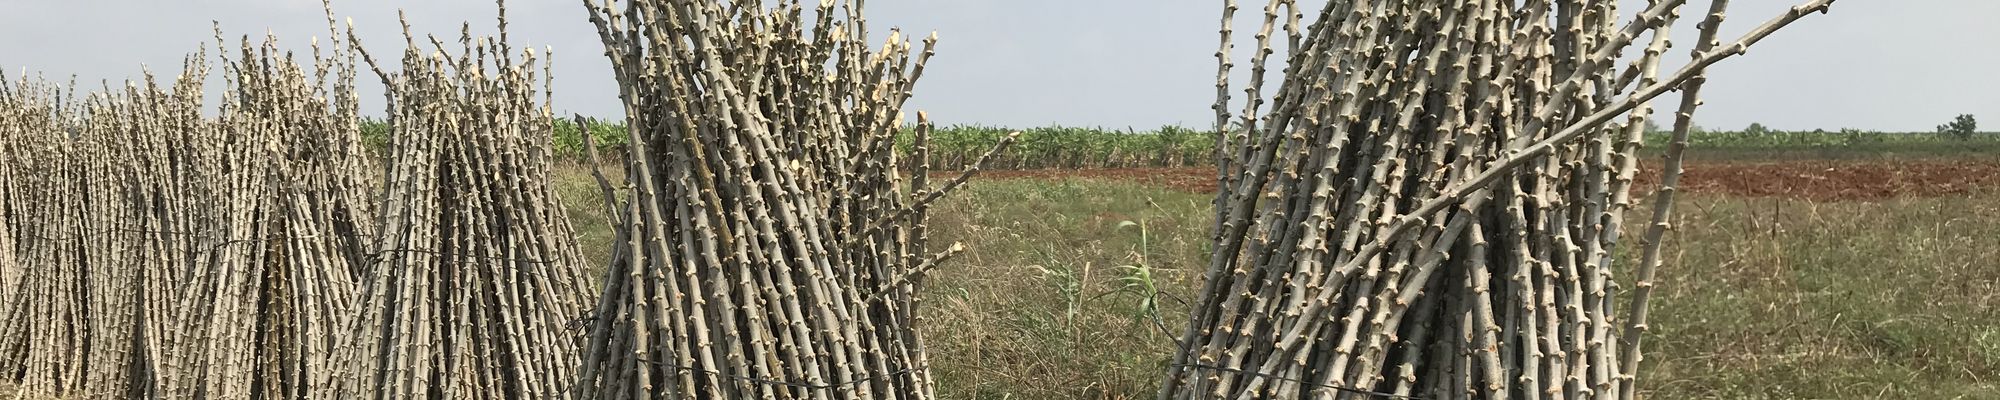 Cassava stalks for planting in Cambodia. © R. Cardinael, CIRAD